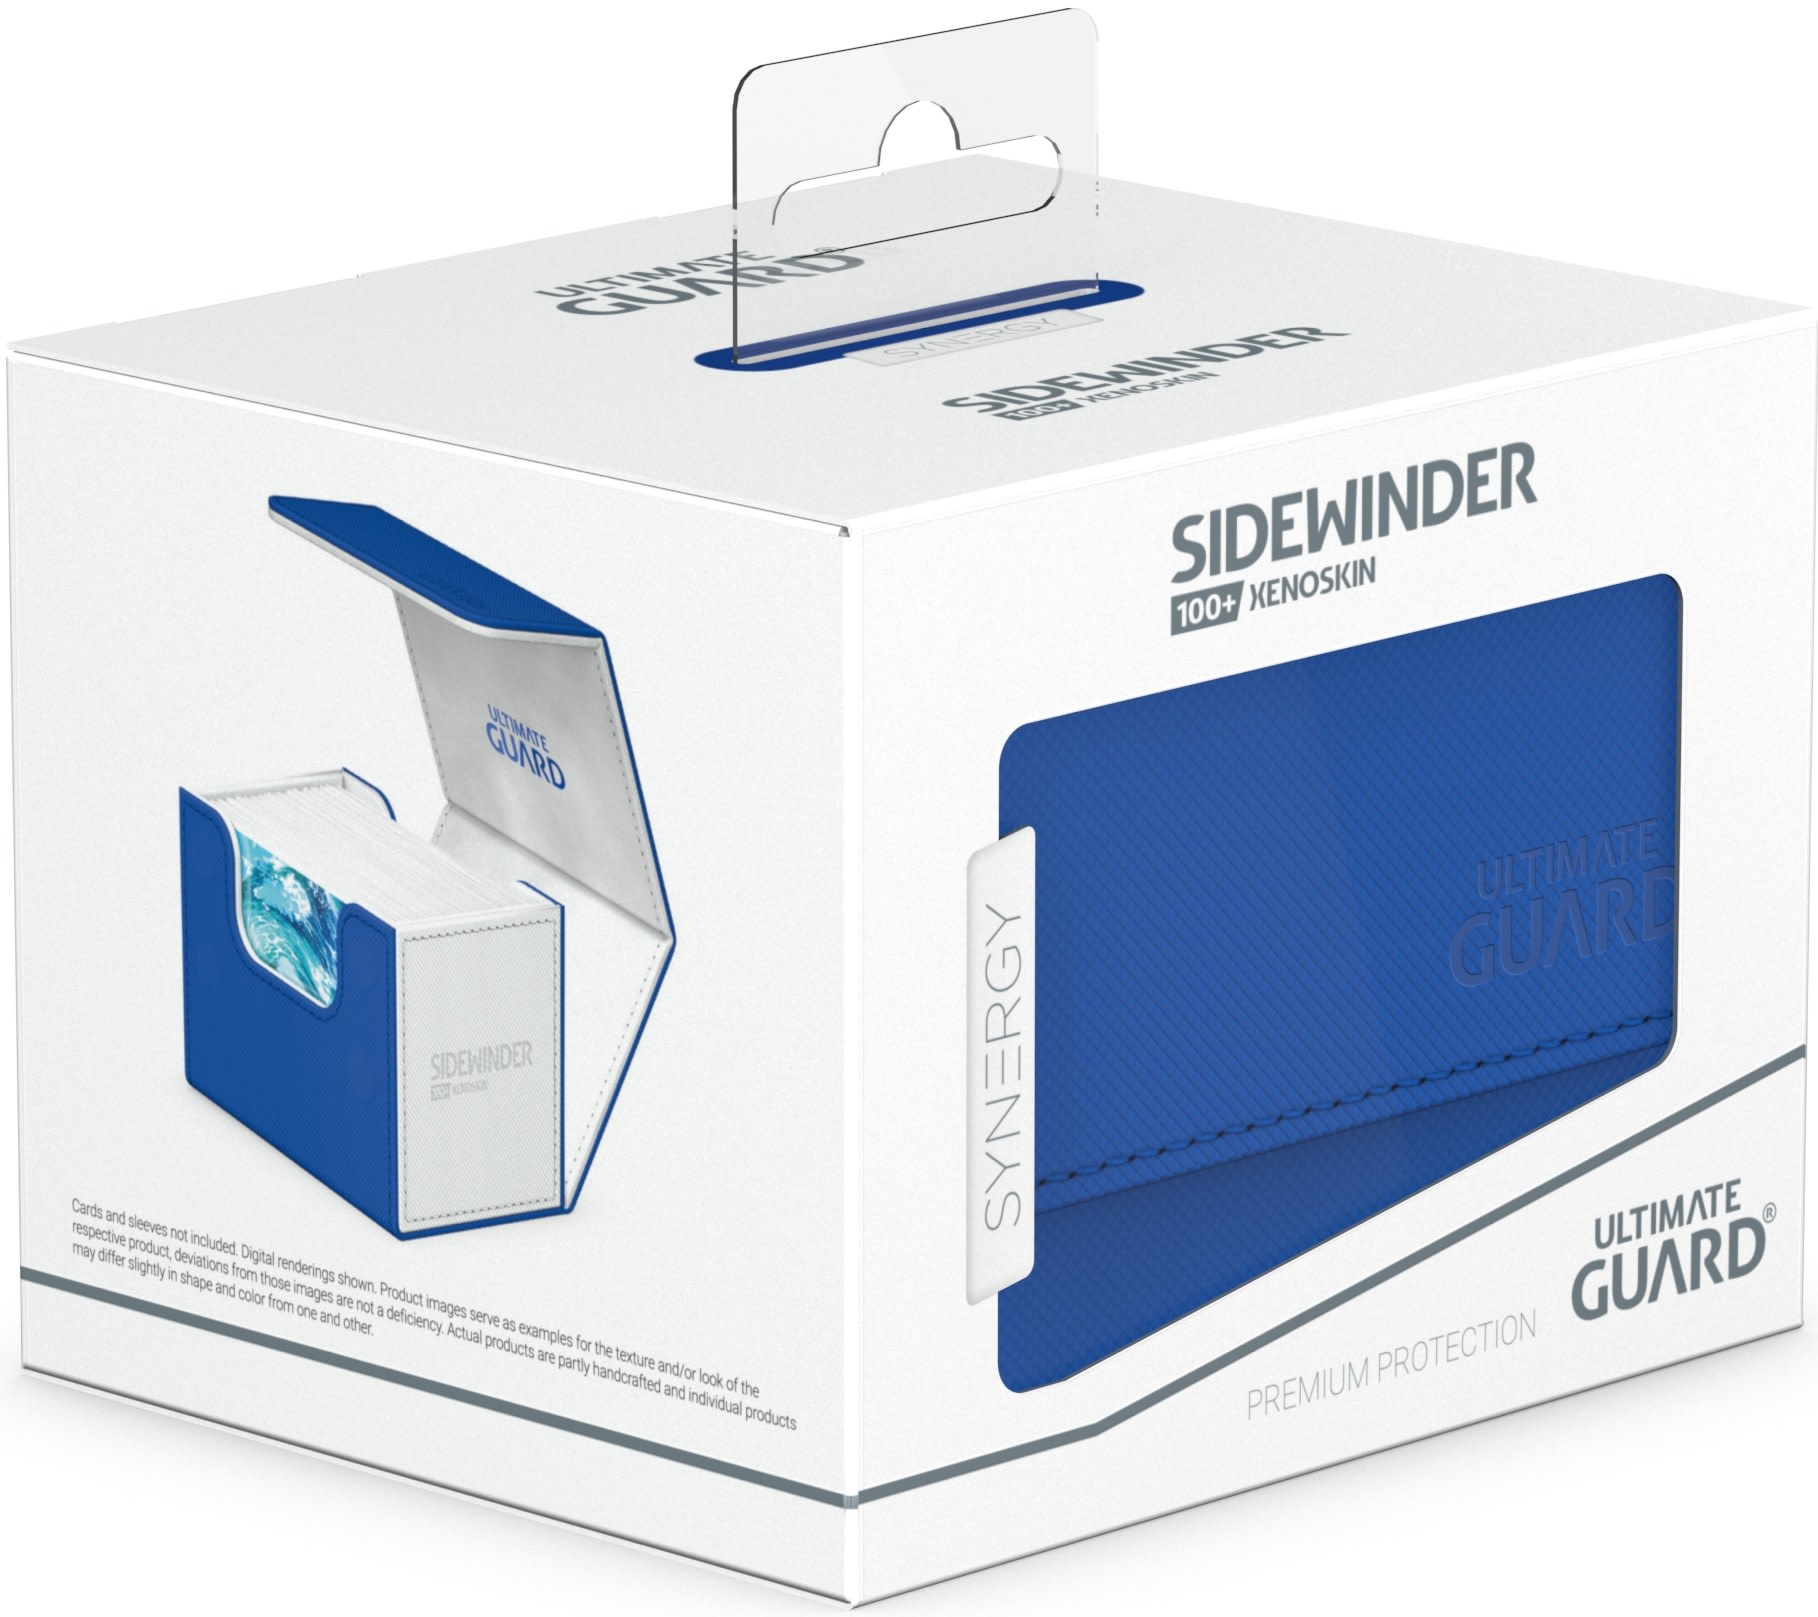 Ultimate Guard Sidewinder Deck Case (100+, White/Blue)